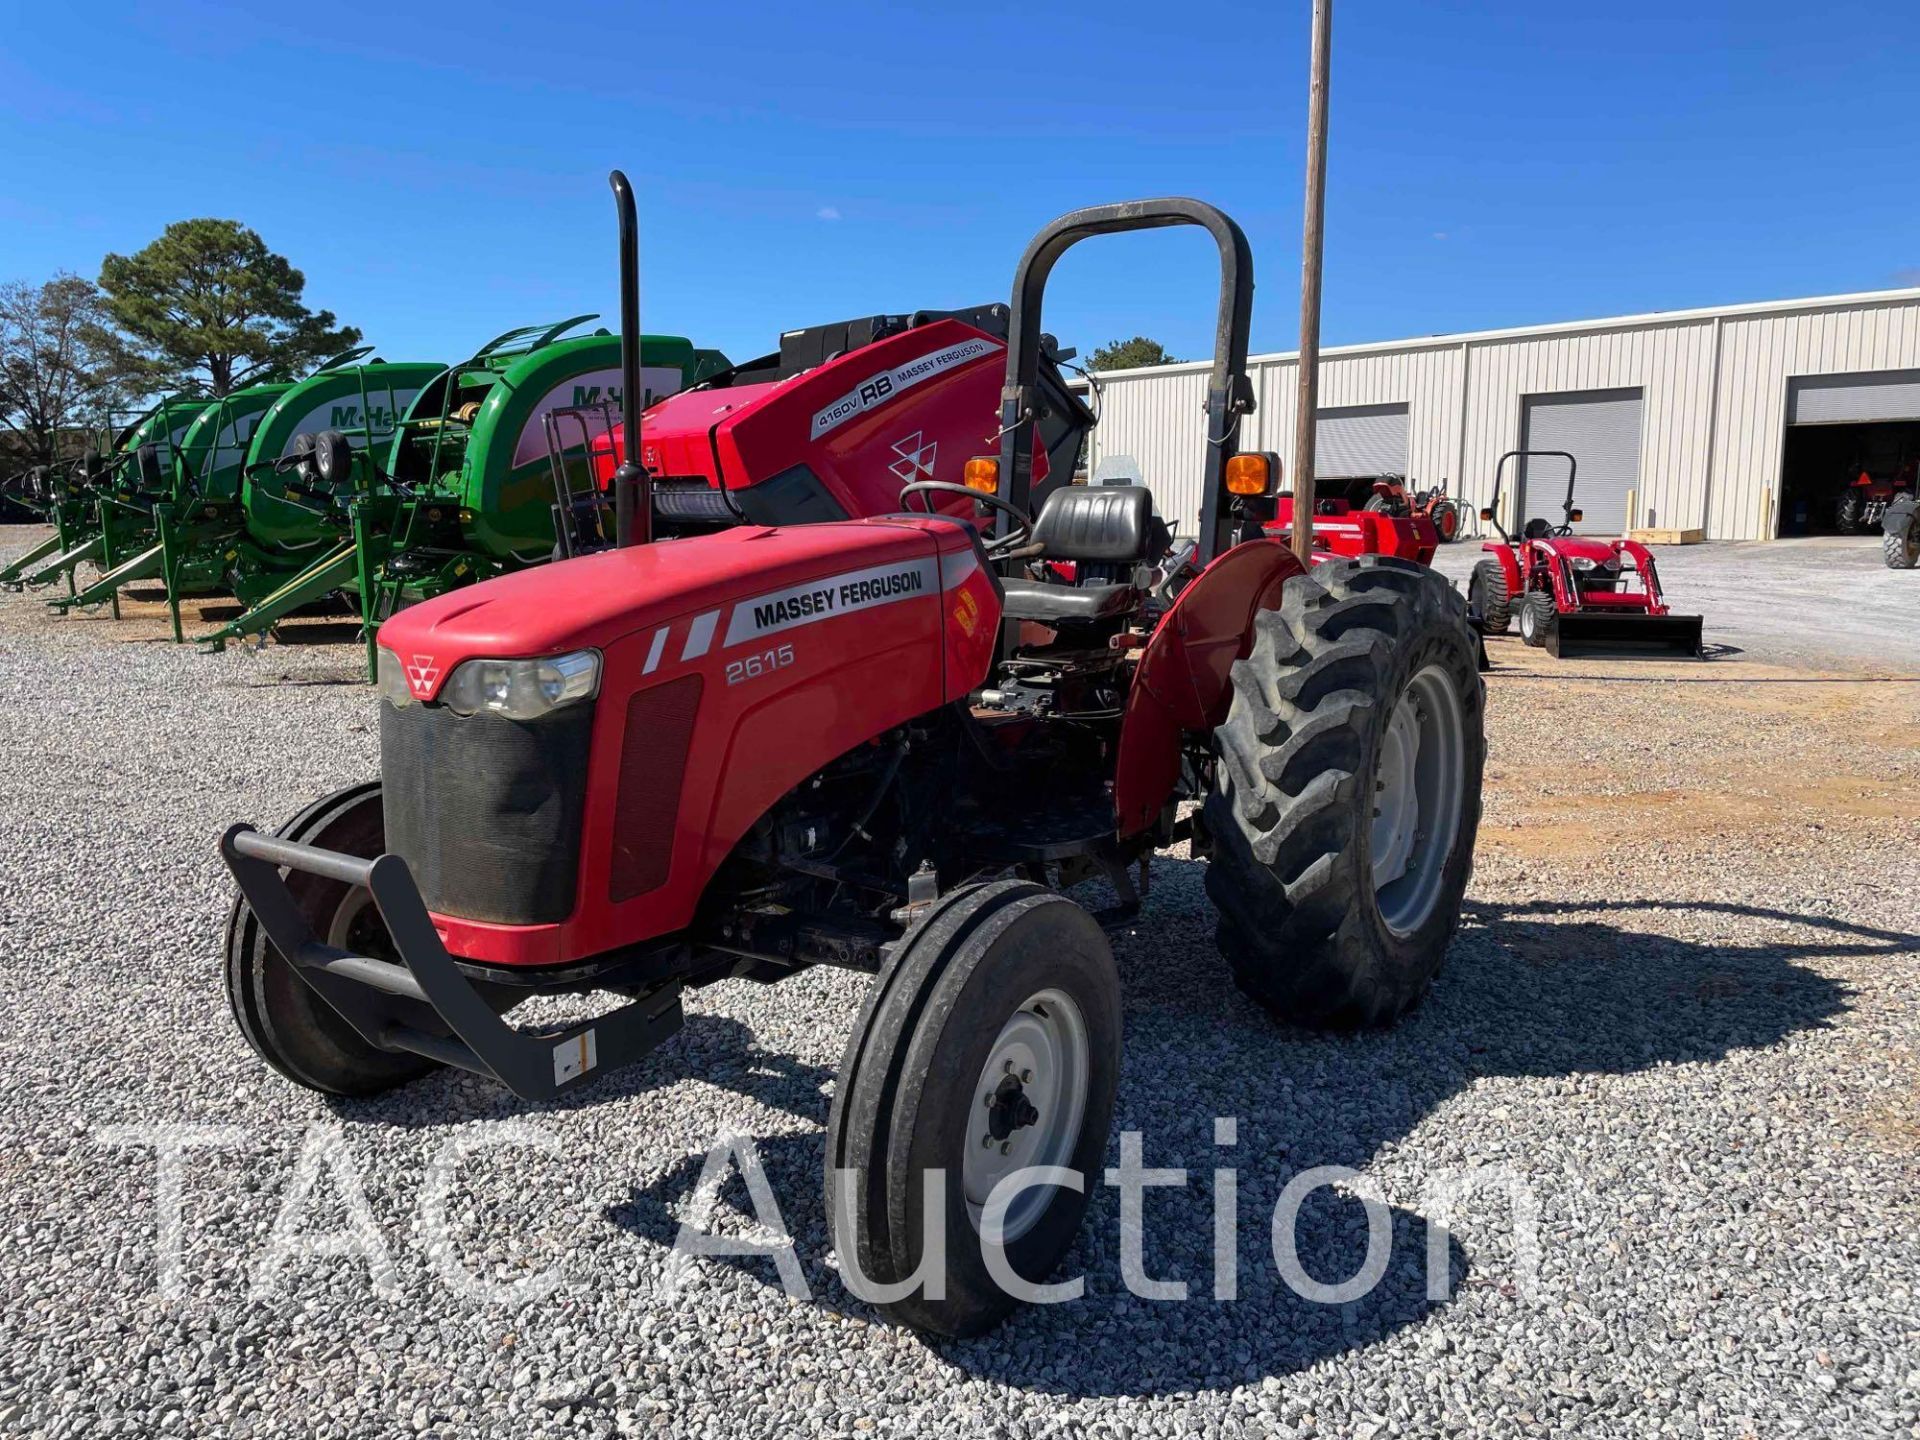 Massey Ferguson 2615 Tractor